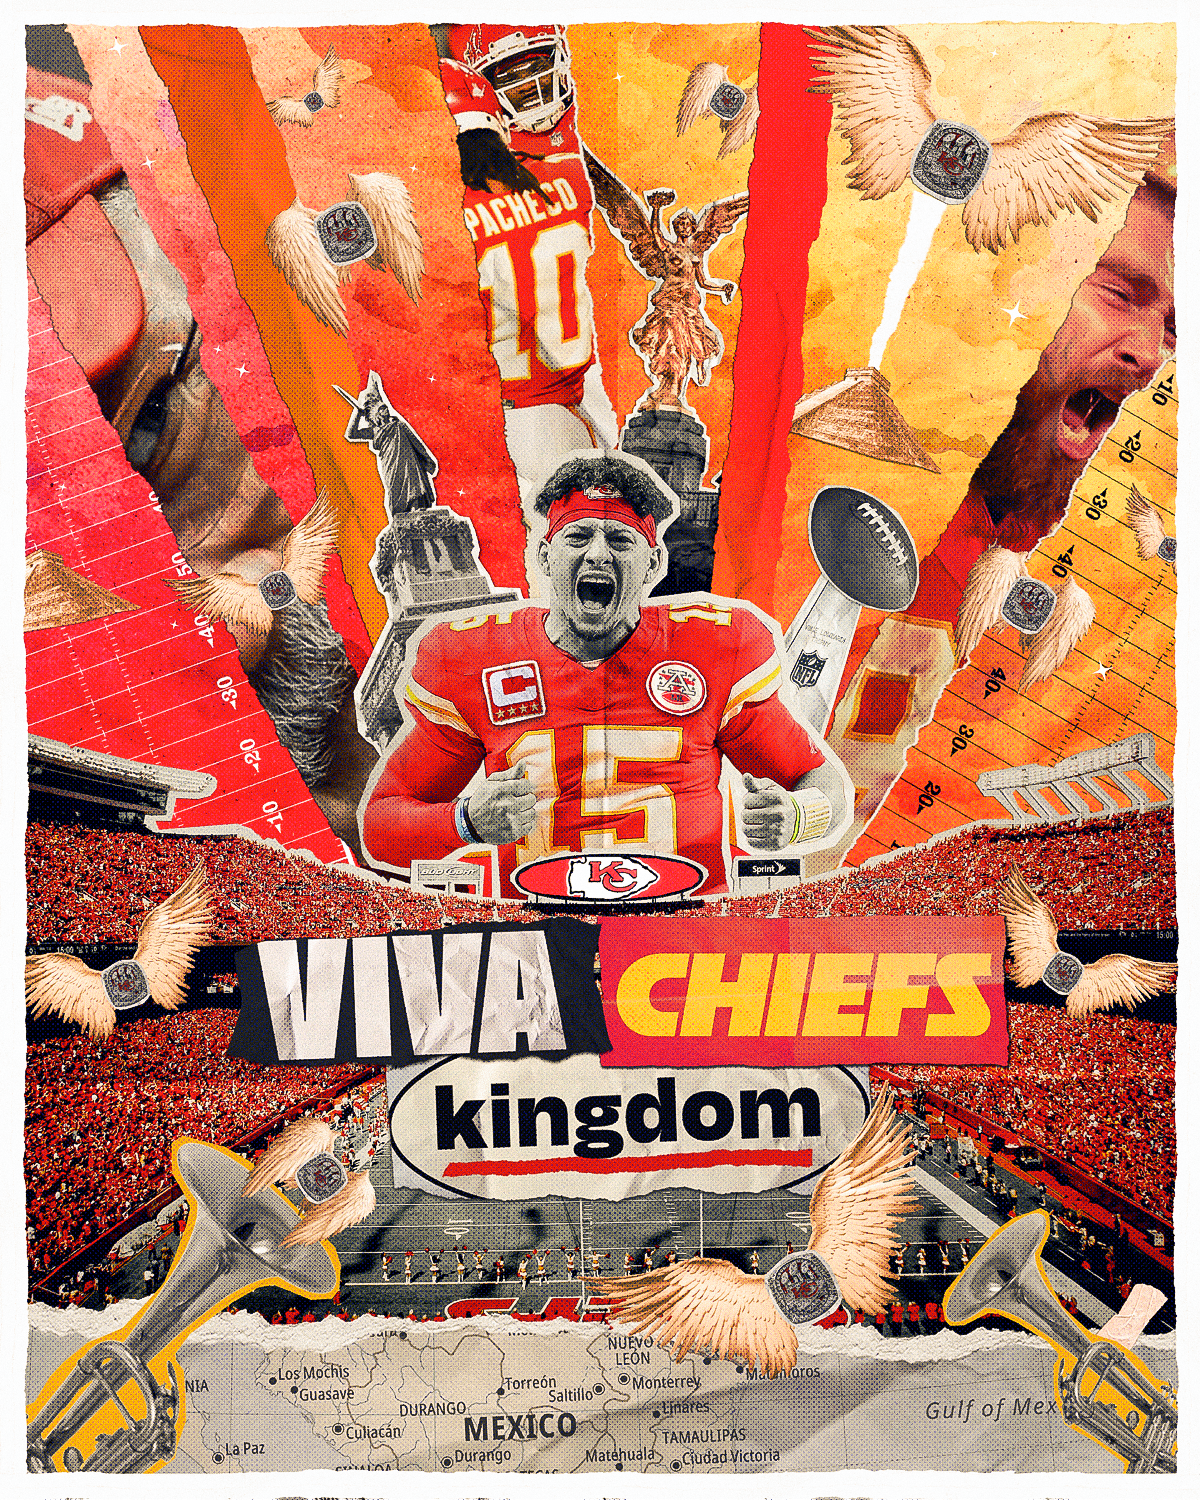 Samba Digital’s Key Role in Creating the “Viva Chiefs Kingdom” Documentary